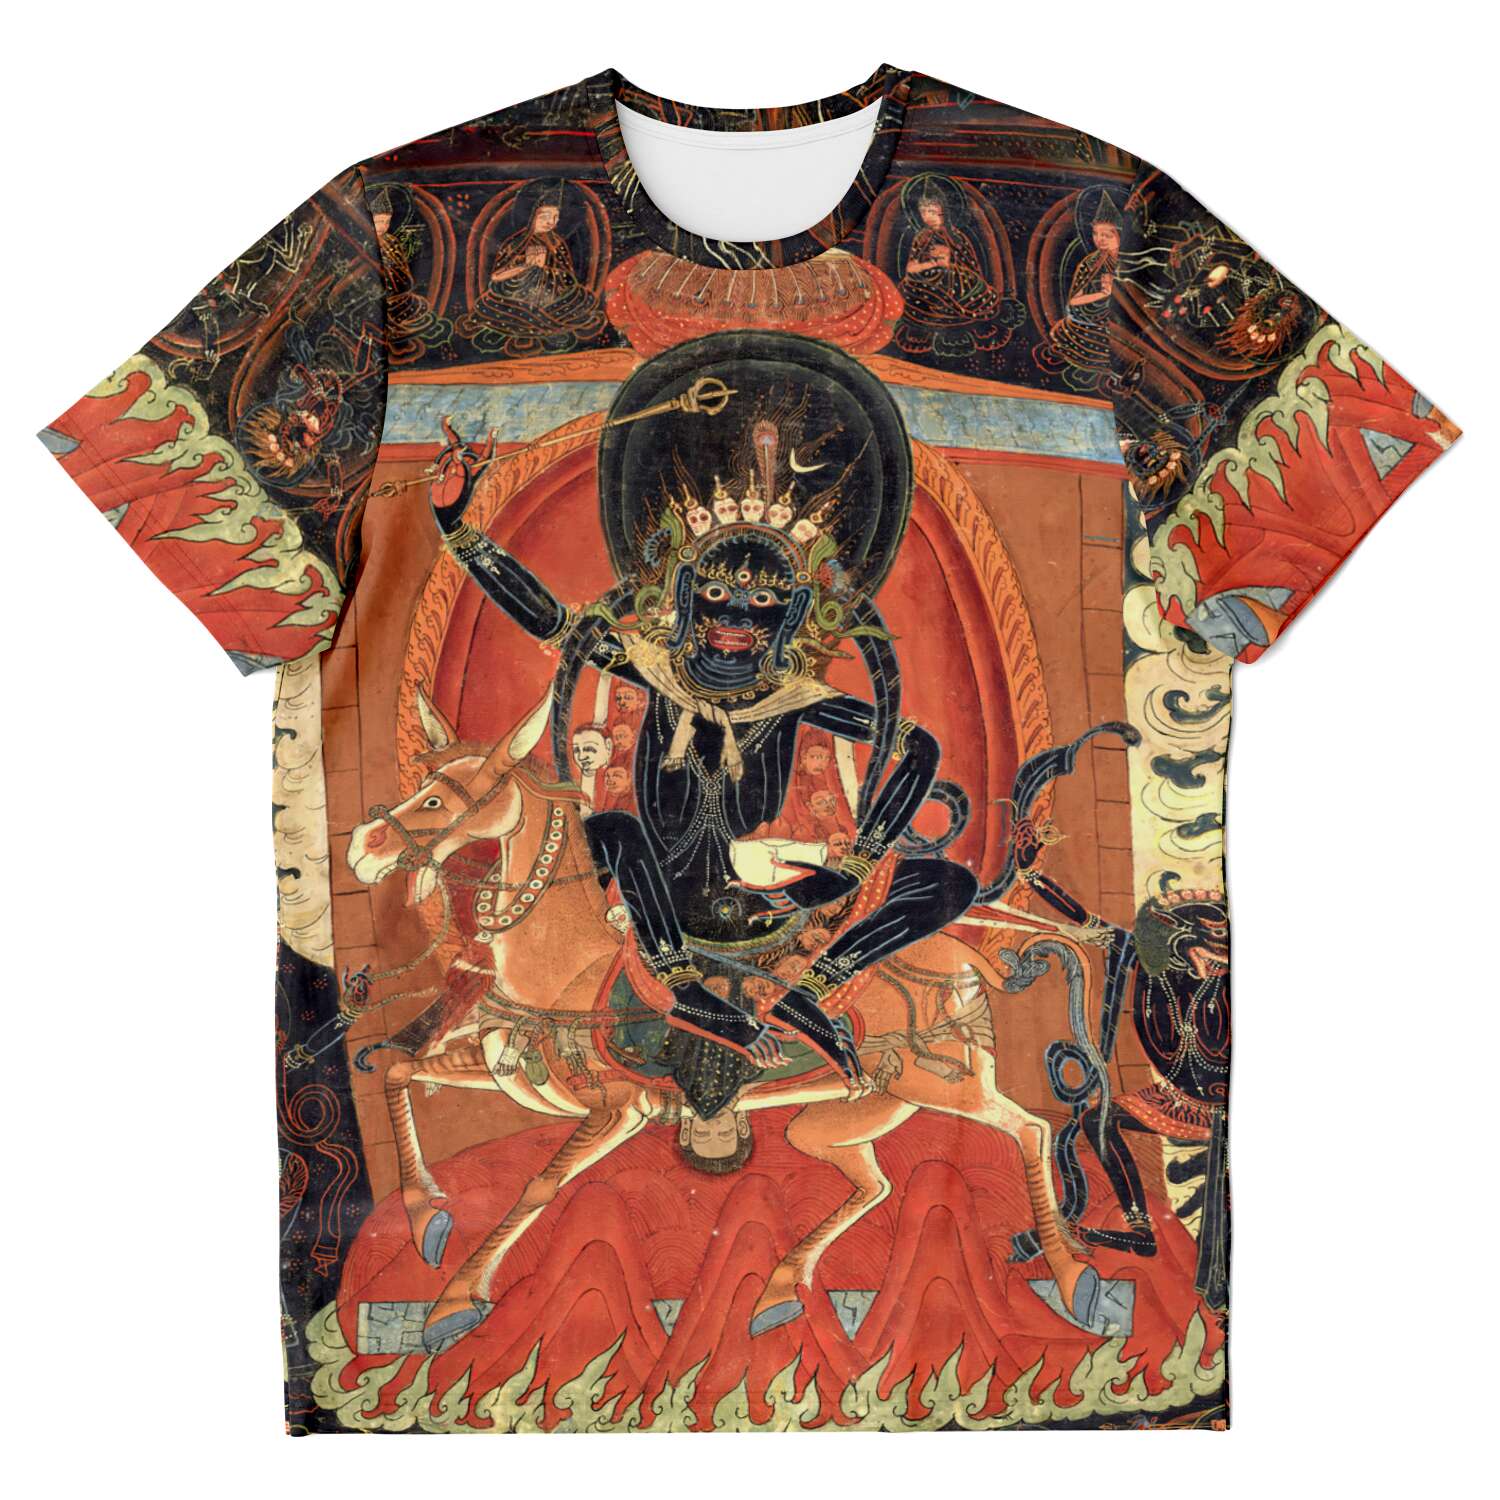 T-shirt XS Palden Lhamo, Vajrayana Deity, Tibetan Thangka Buddhist Dakini Yogini Sacred Antique Tantra Feminist Tantric Vintage T-Shirt Tee